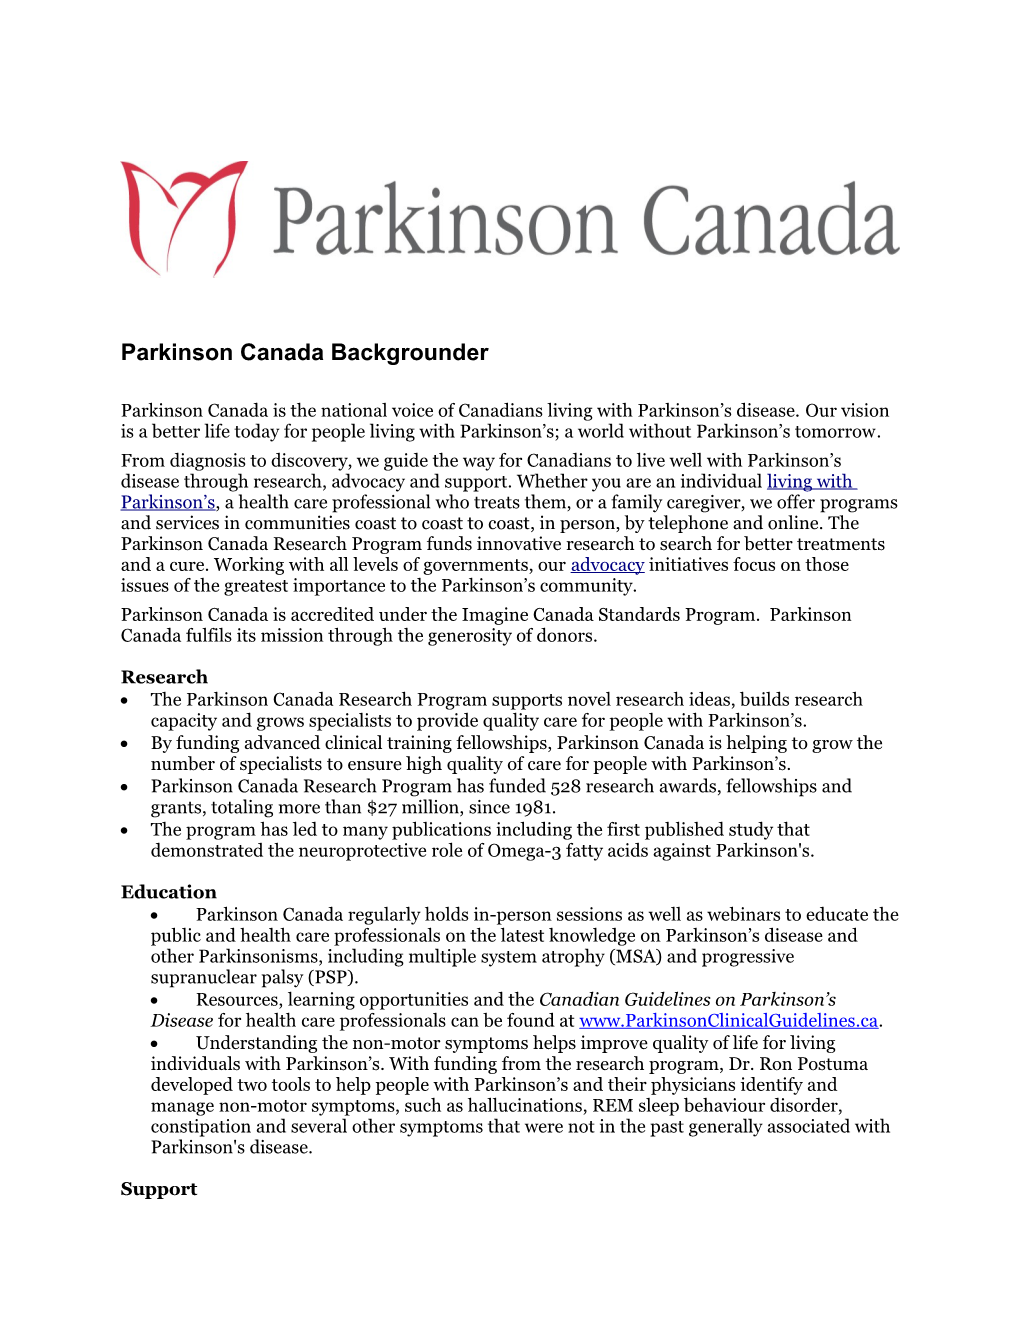 Parkinson Canada Backgrounder